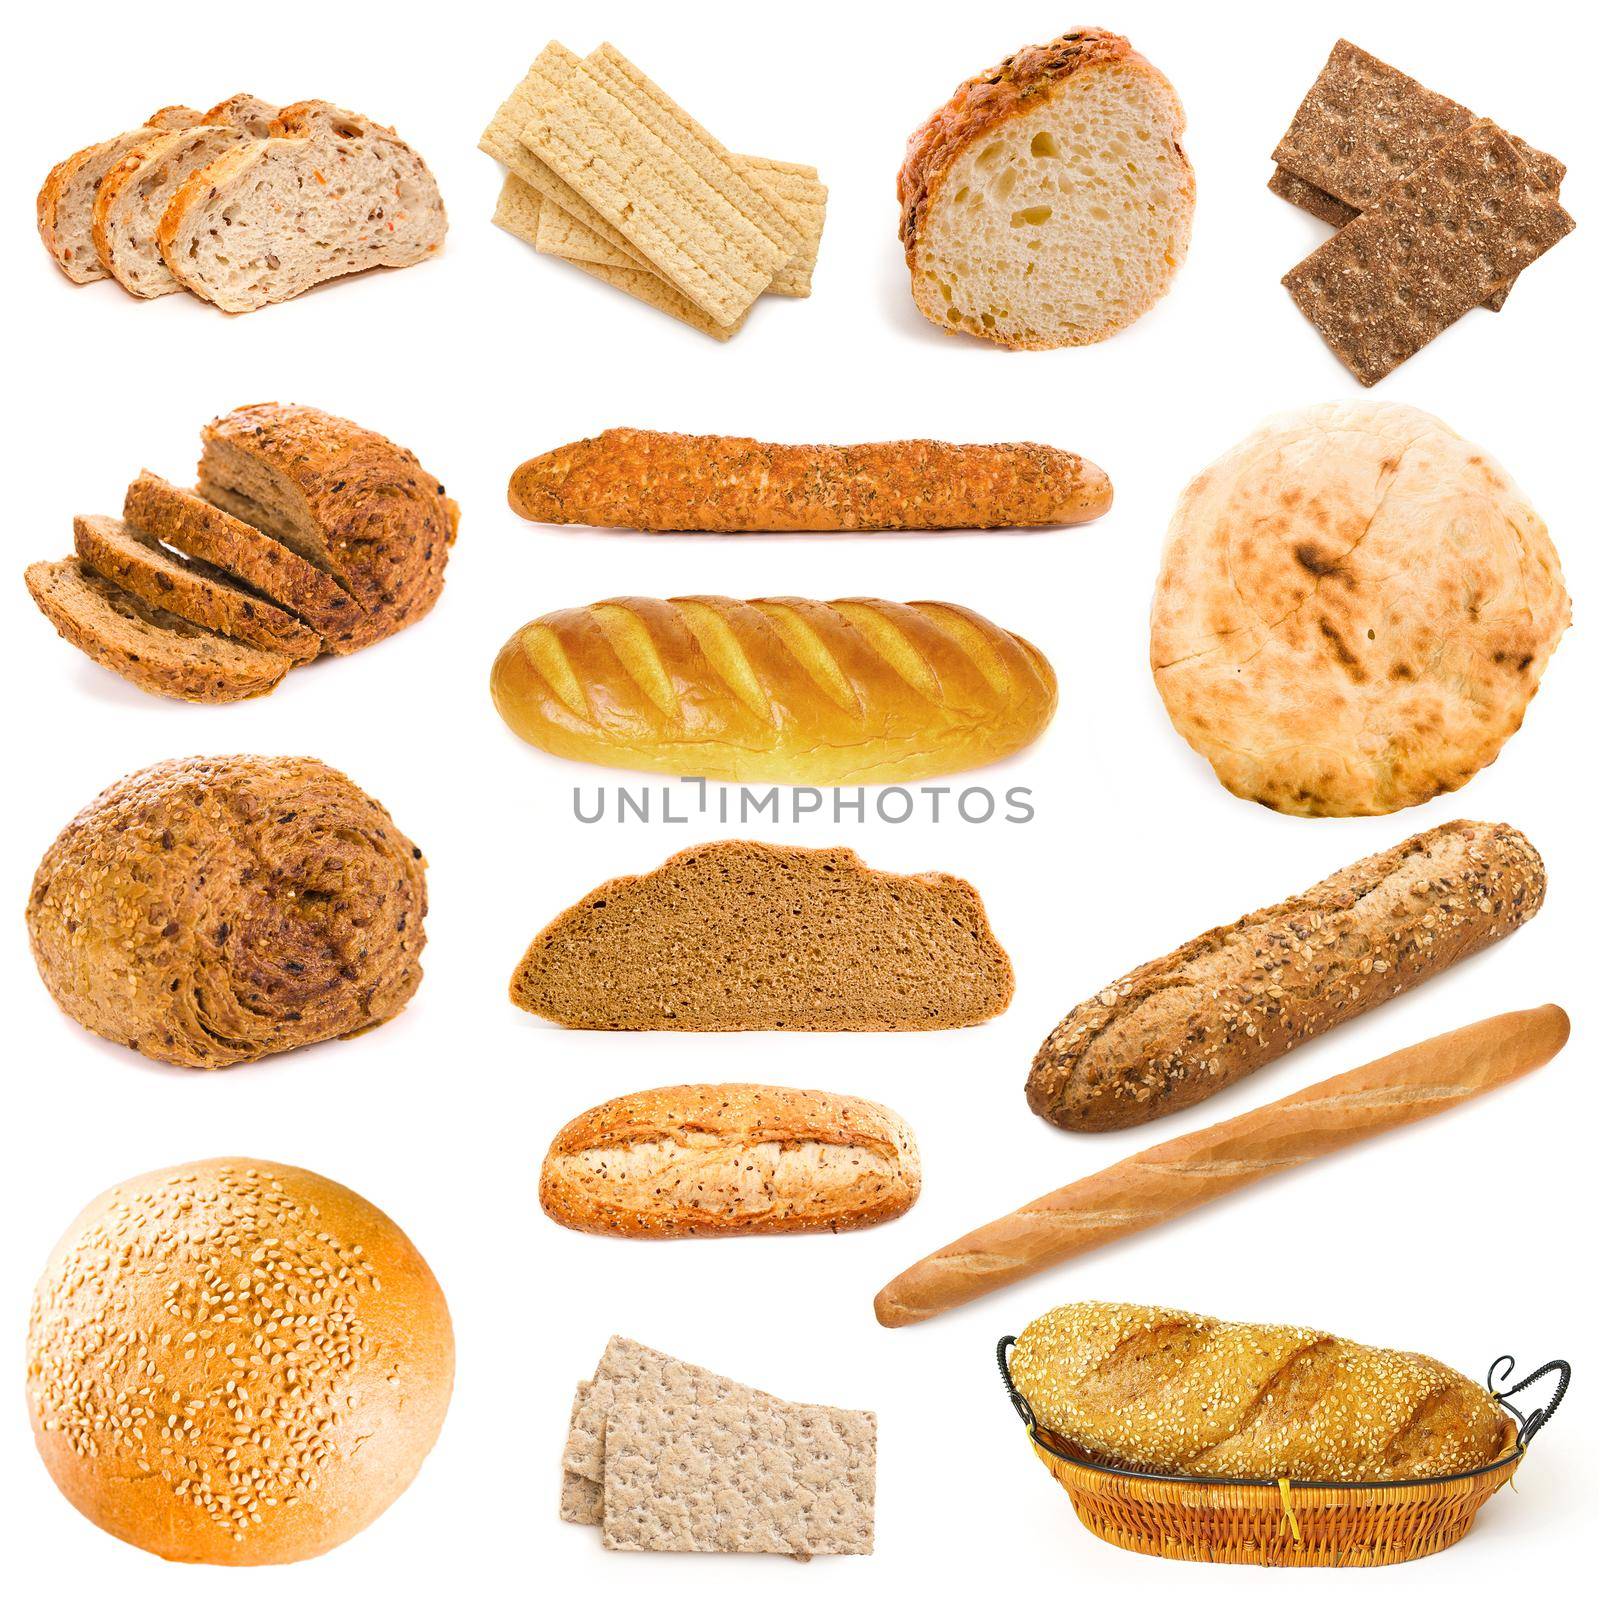 Bread and bakery by tan4ikk1